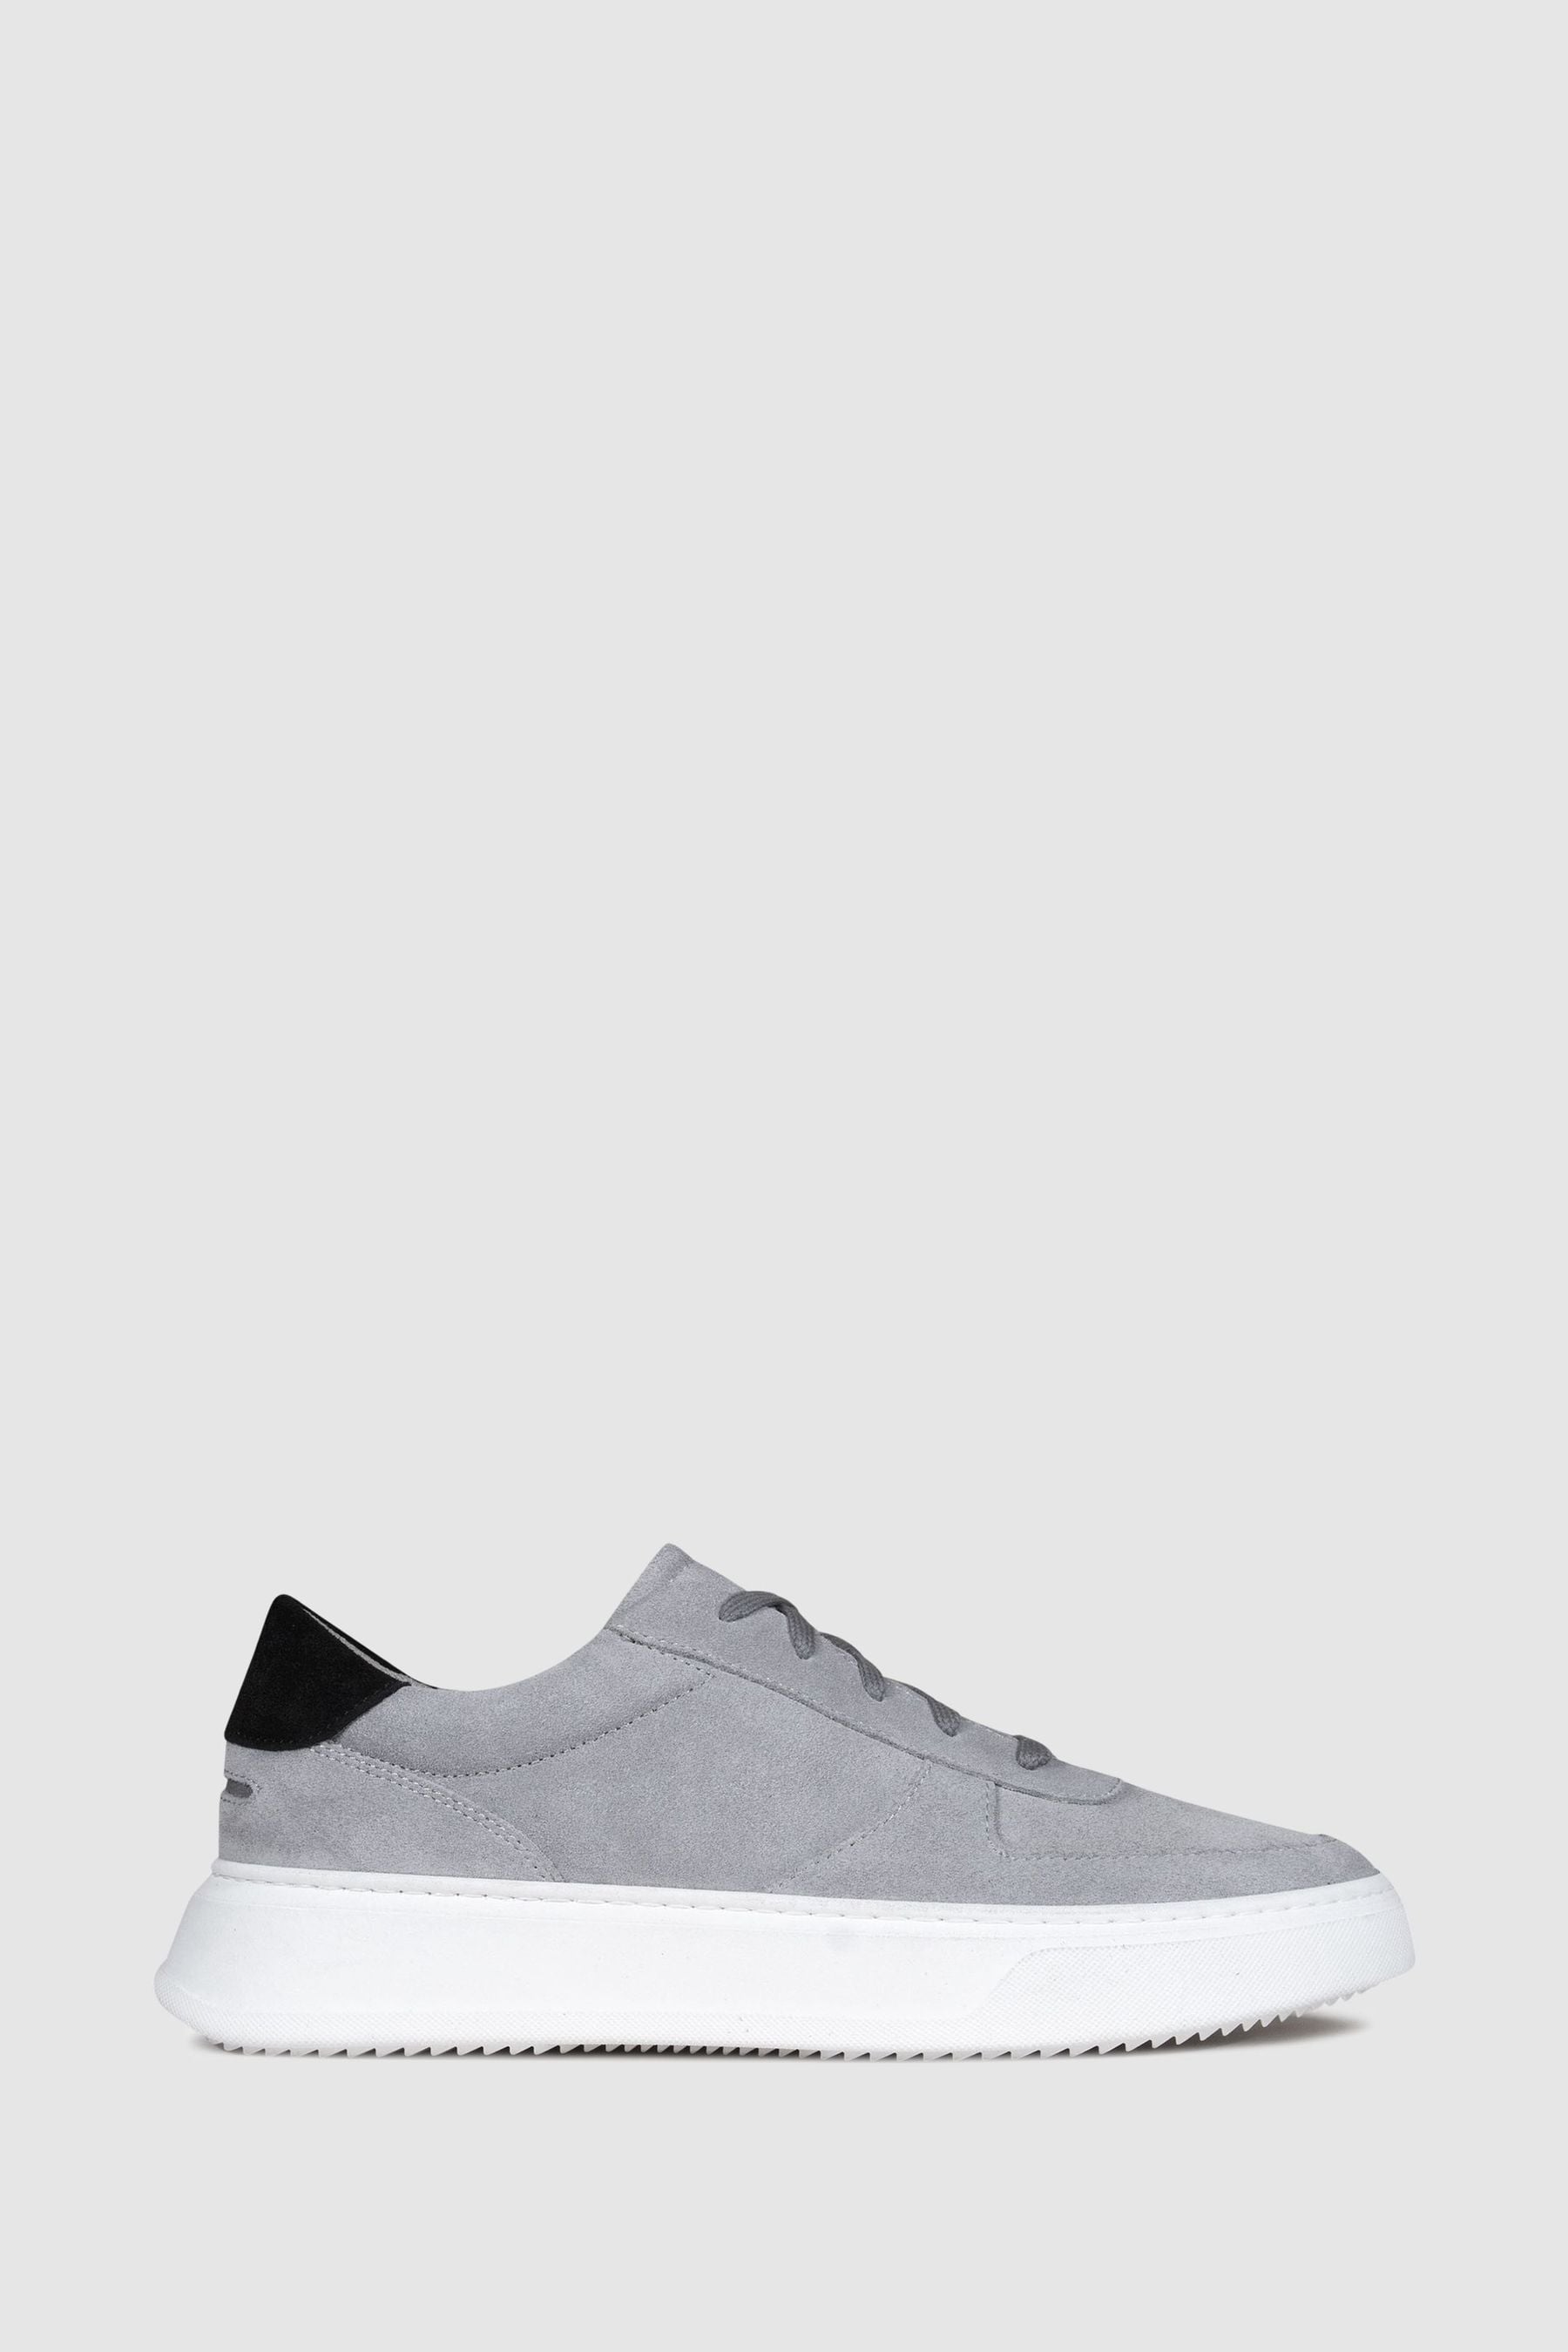 Unseen Footwear Suede Marais Trainers In Grey/black